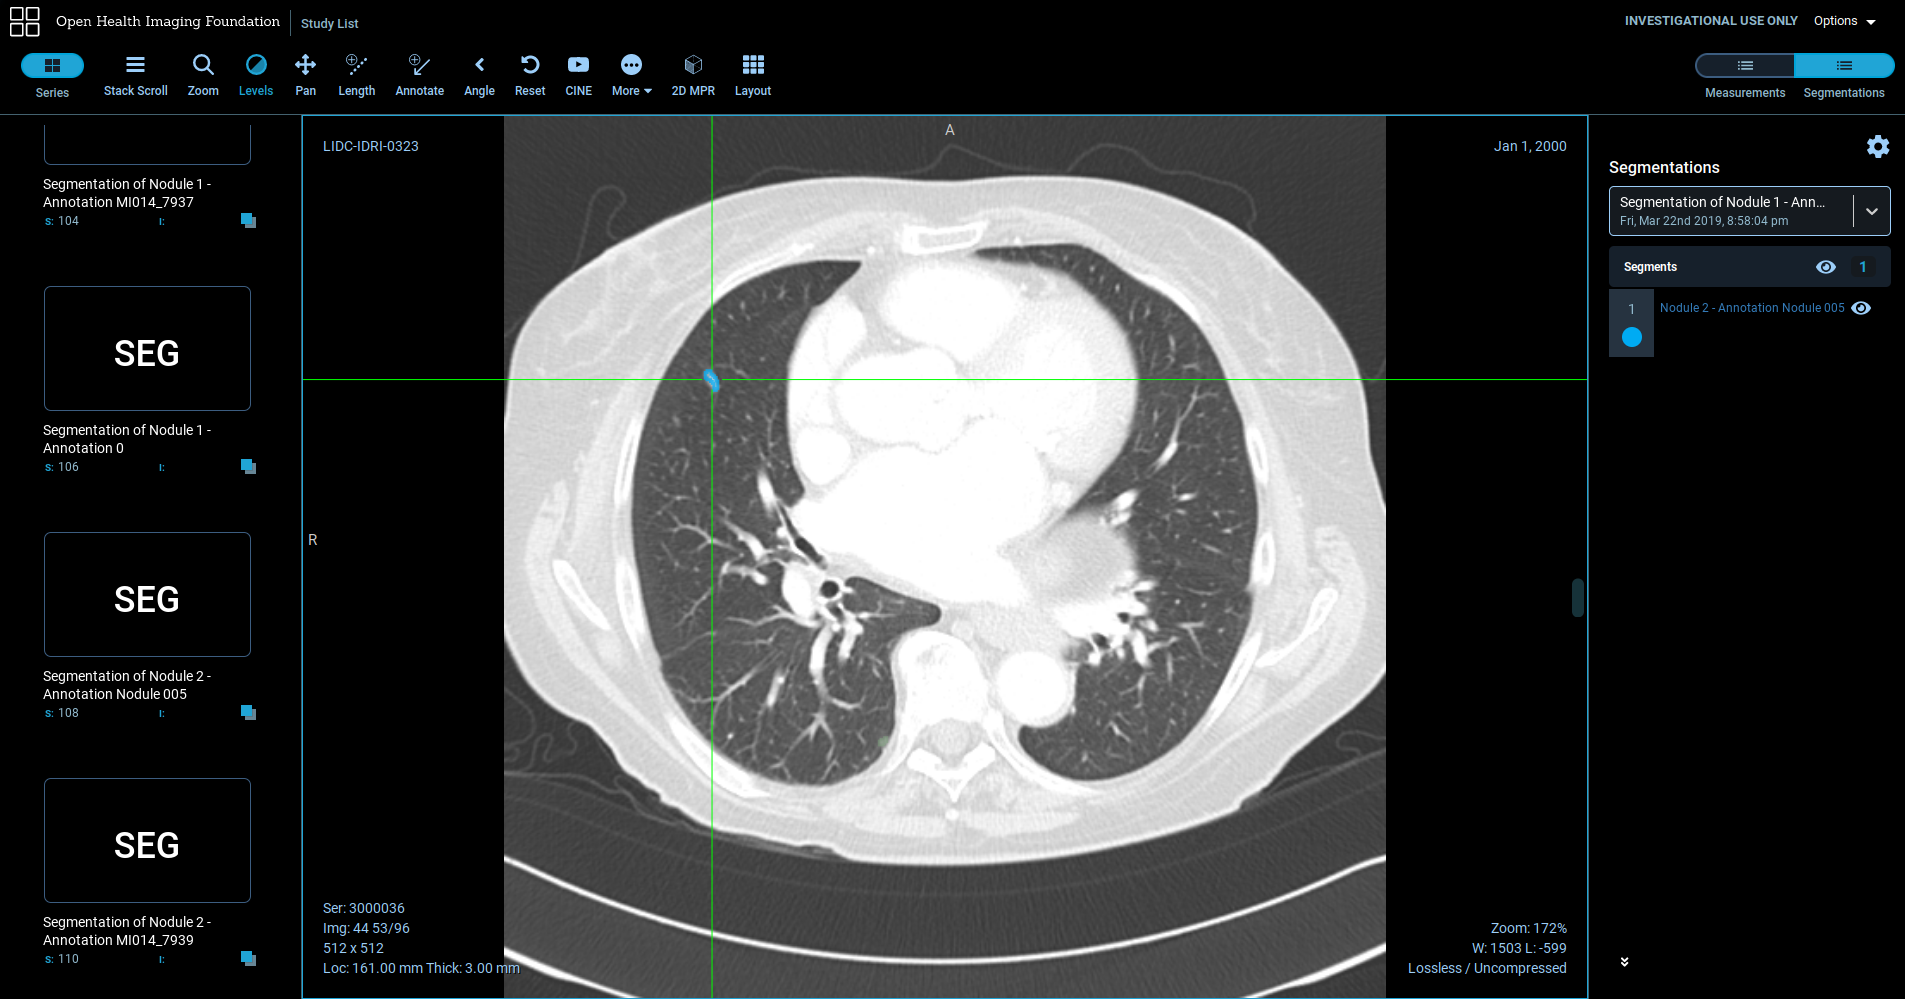 Lung nodule segmentation in OHIF viewer